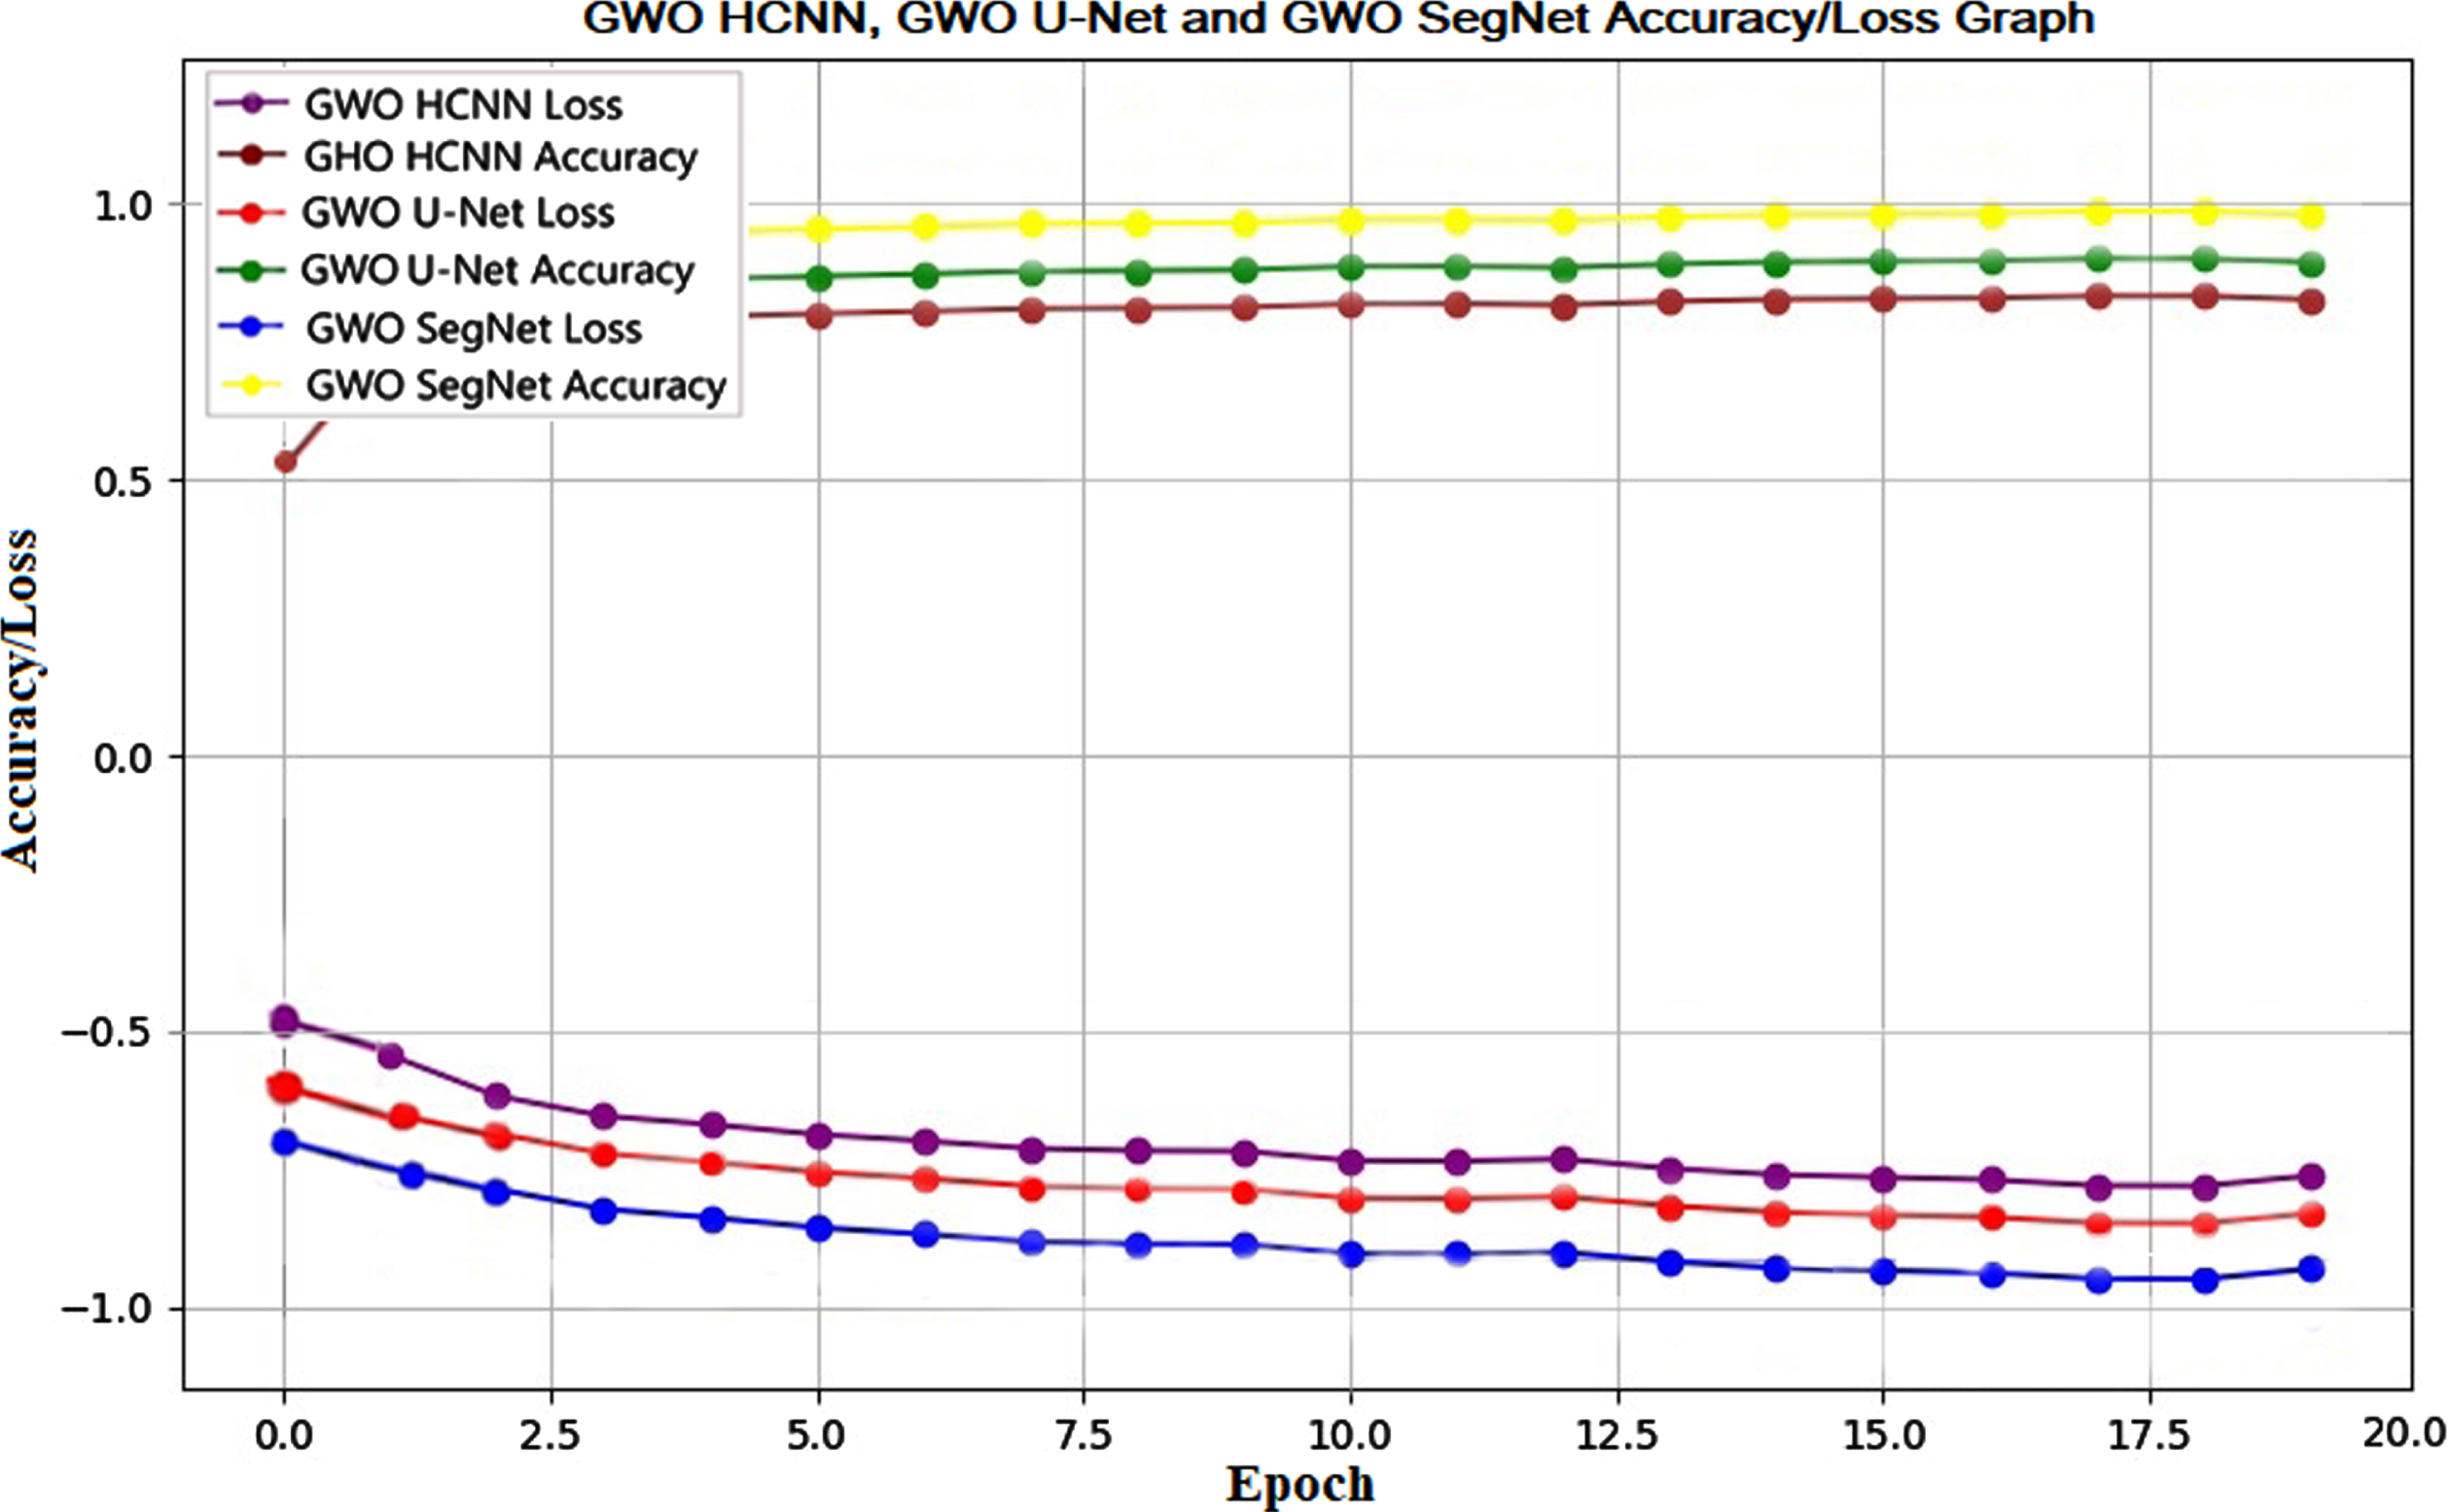 GWO-Hybrid CNN, GWO-U-Net and GWO-SegNet Accuracy/Loss graph.